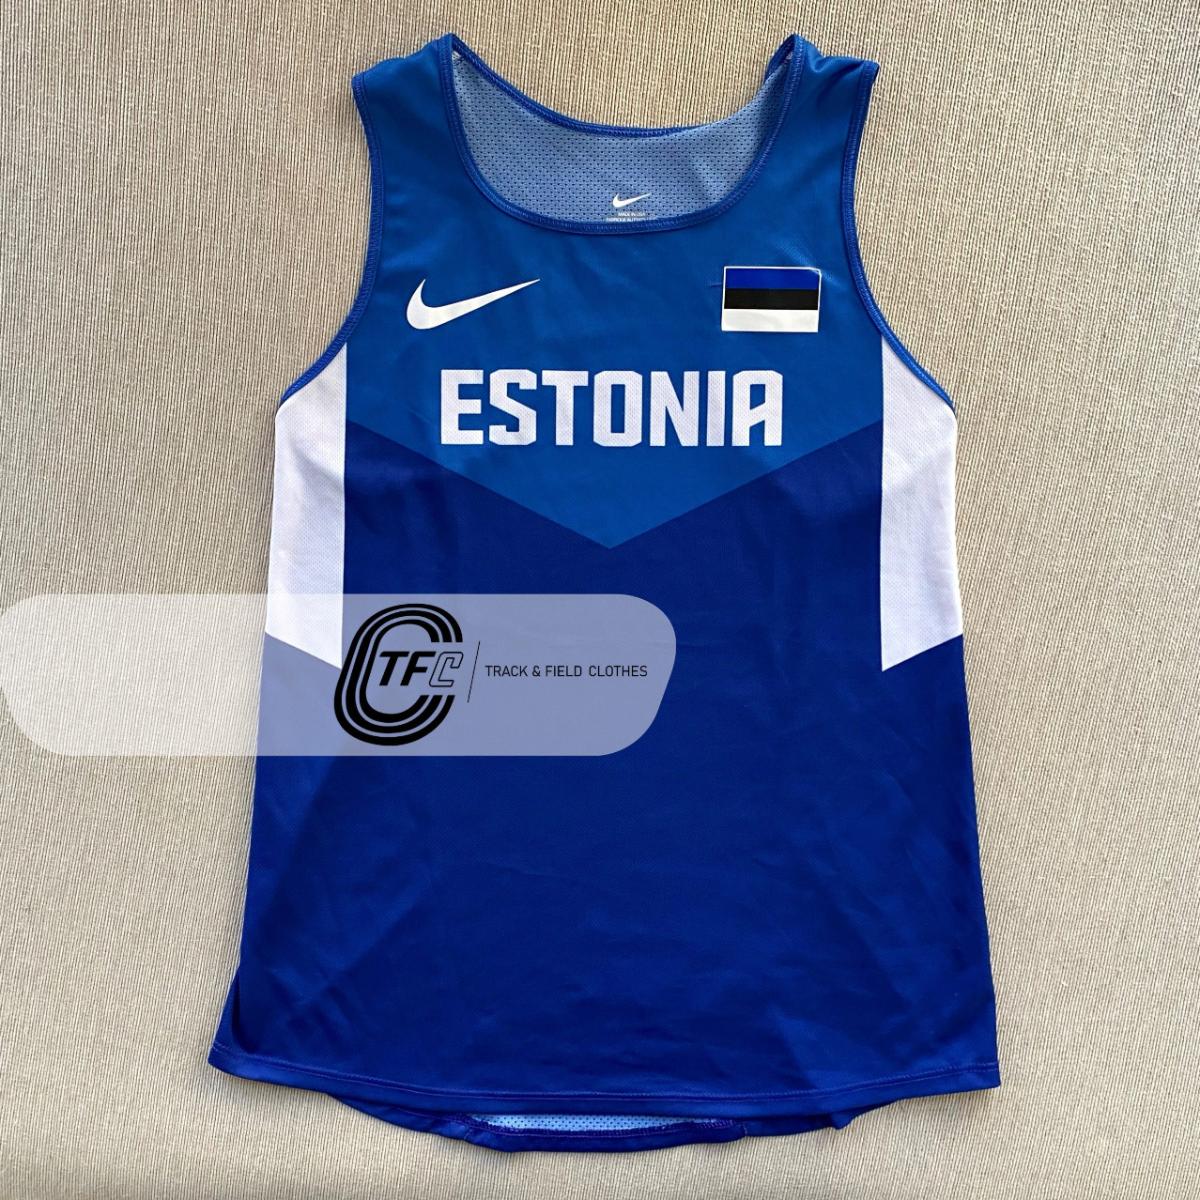 Nike 2015 Estonia International Team Pro Elite W Distance | Trackandfieldclothes